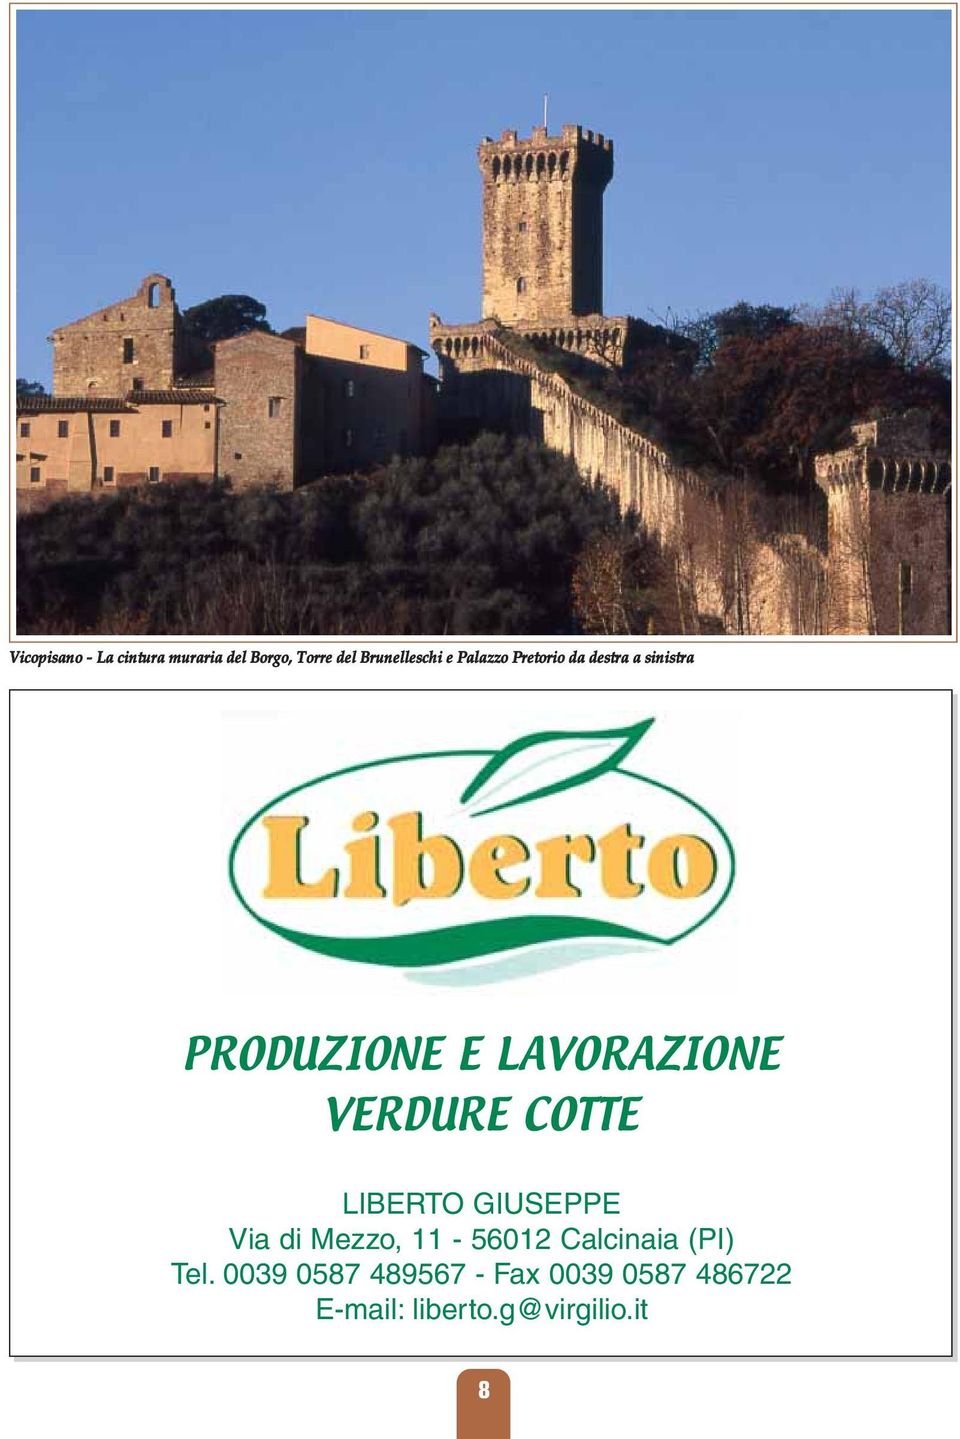 VERDURE COTTE LIBERTO GIUSEPPE Via di Mezzo, 11-56012 Calcinaia (PI)